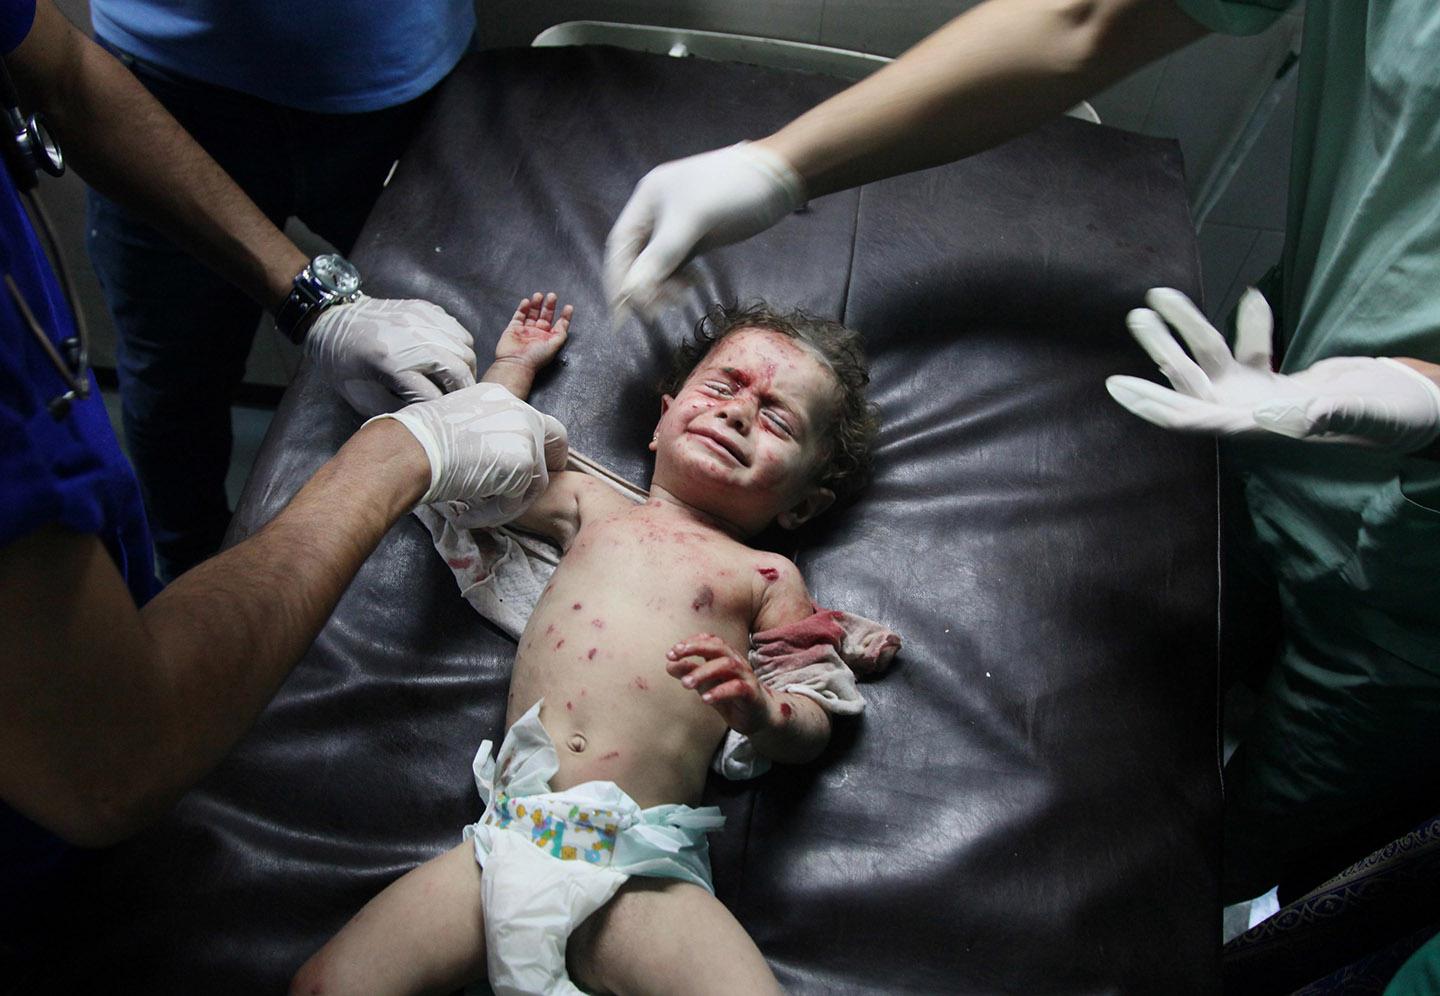 A Palestinian baby, injured in an Israeli airstrike.